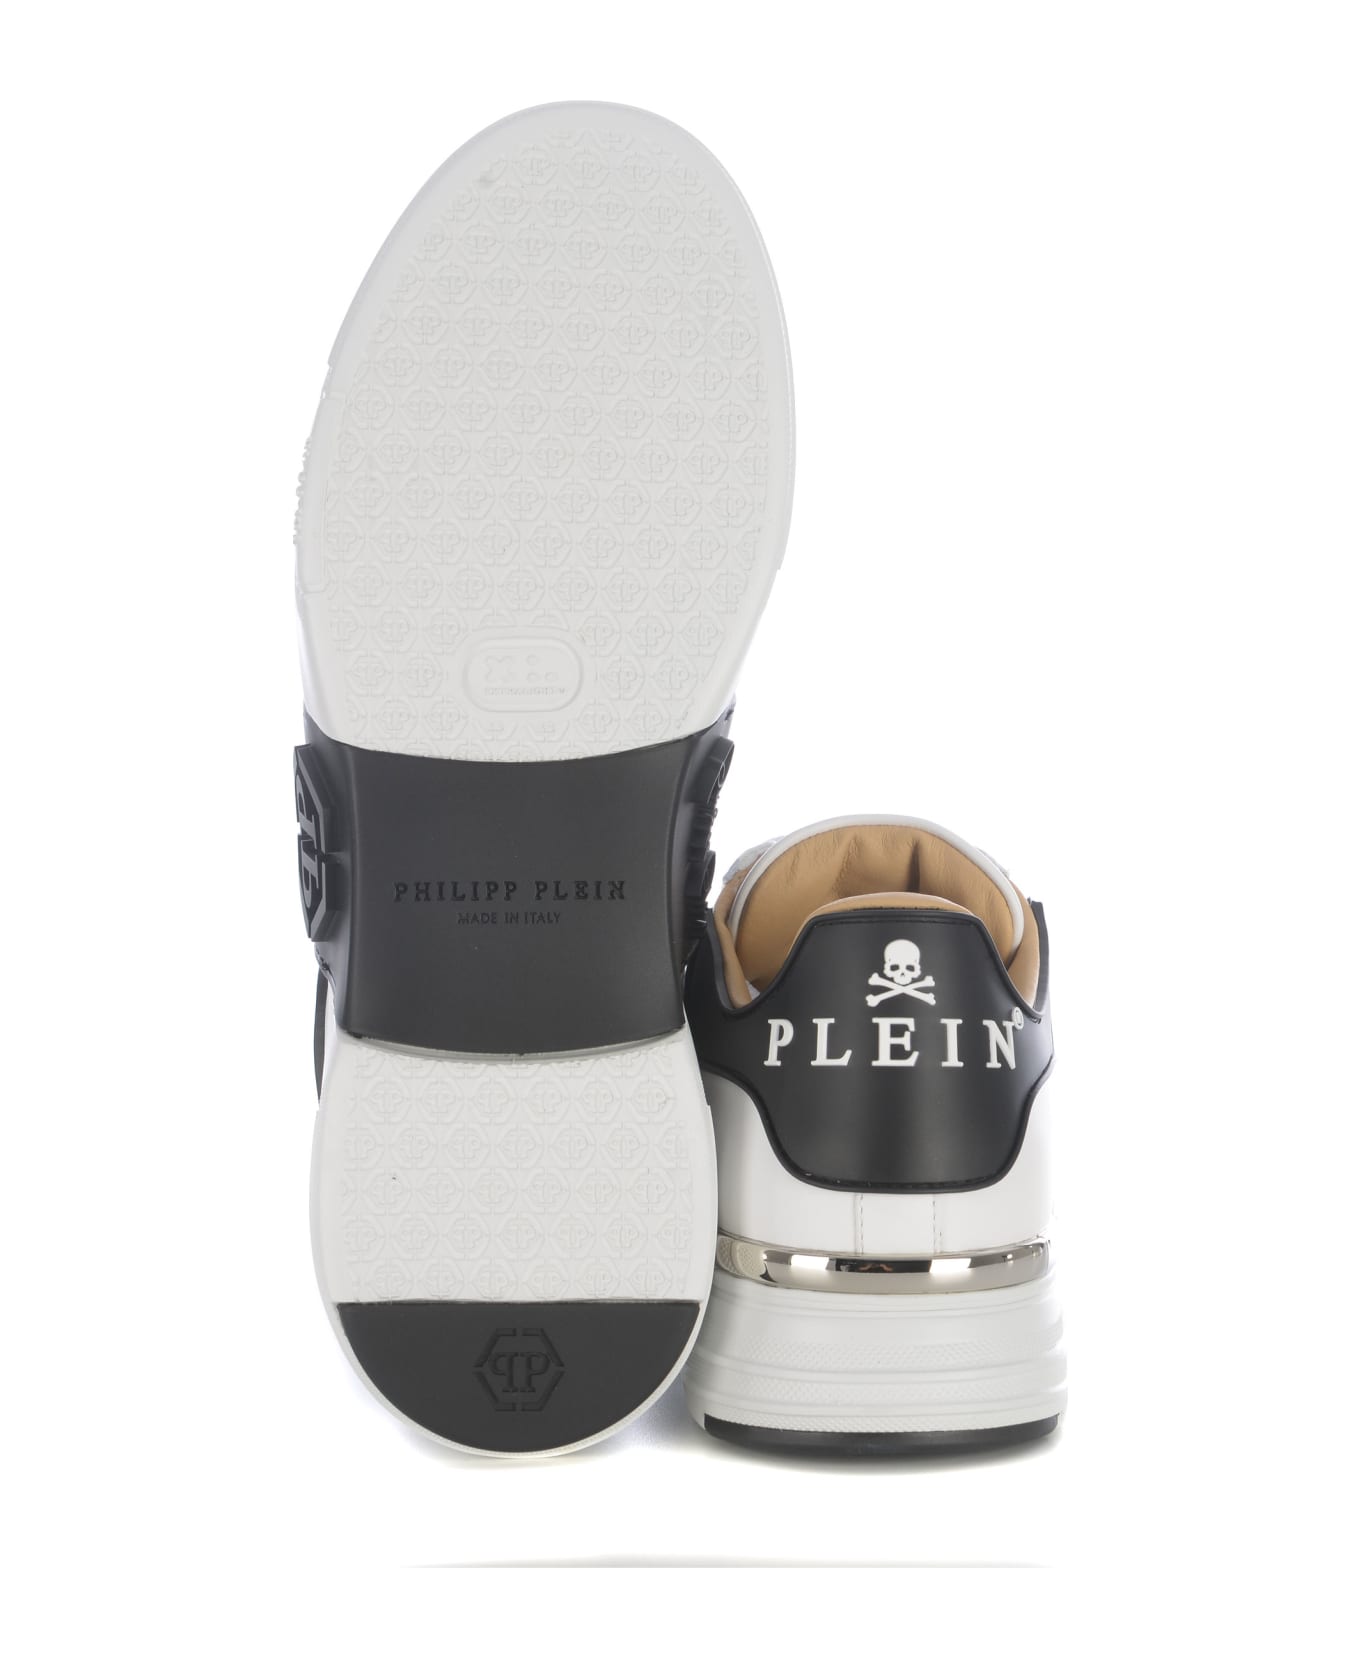 Philipp Plein Sneakers Philipp Plein "phantom" Made Of Leather - Bianco スニーカー